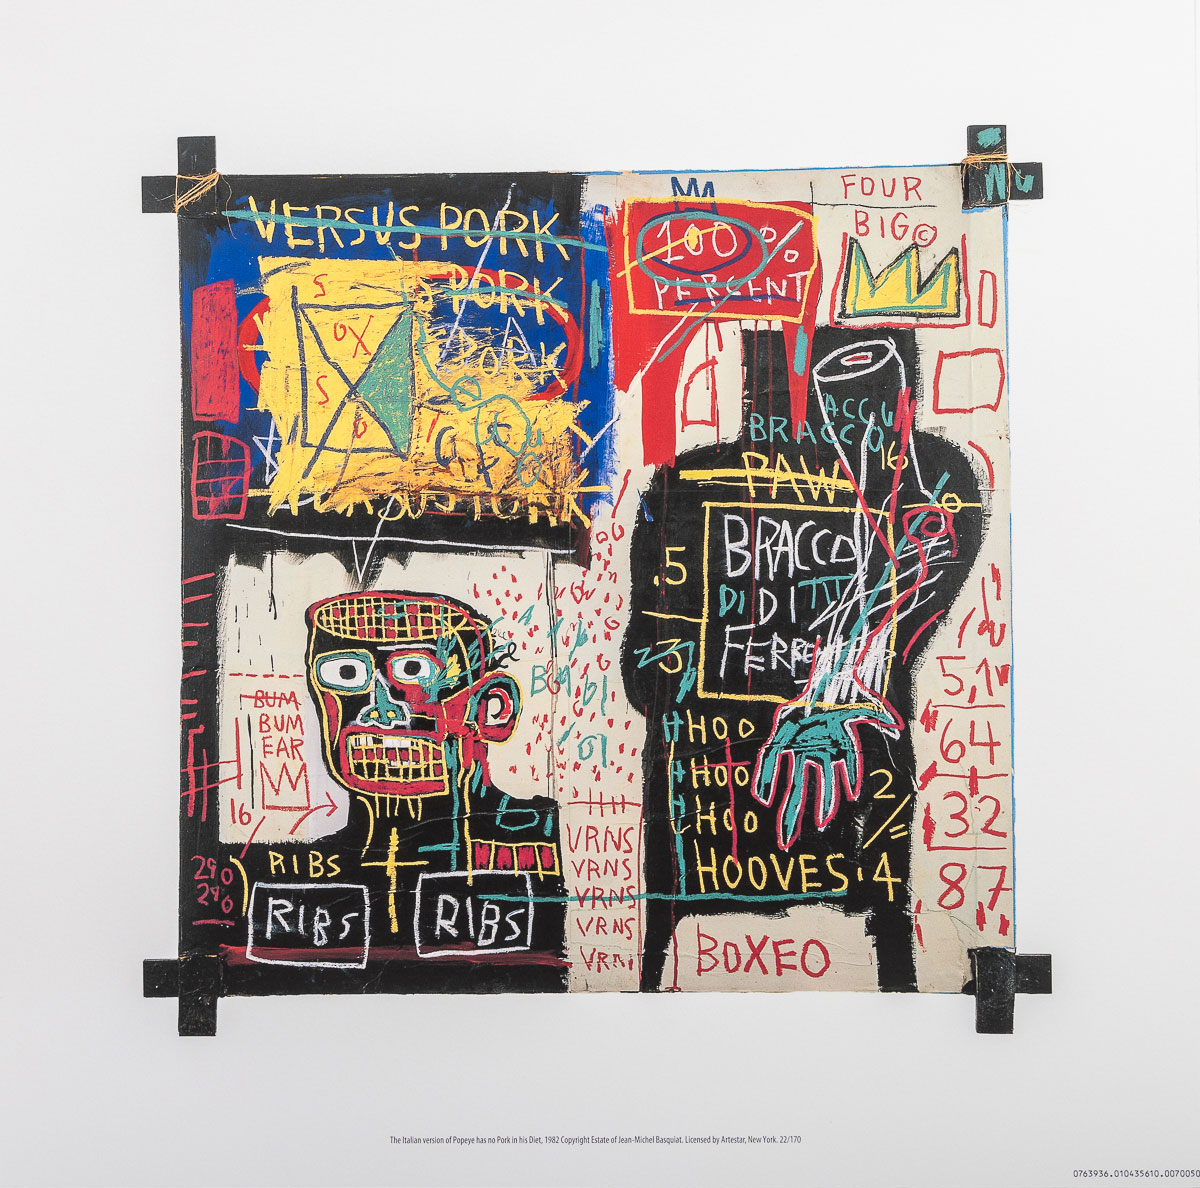 Jean-Michel Basquiat Art Print - The Italian version of Popeye has no Pork in his Diet (1982) - Print